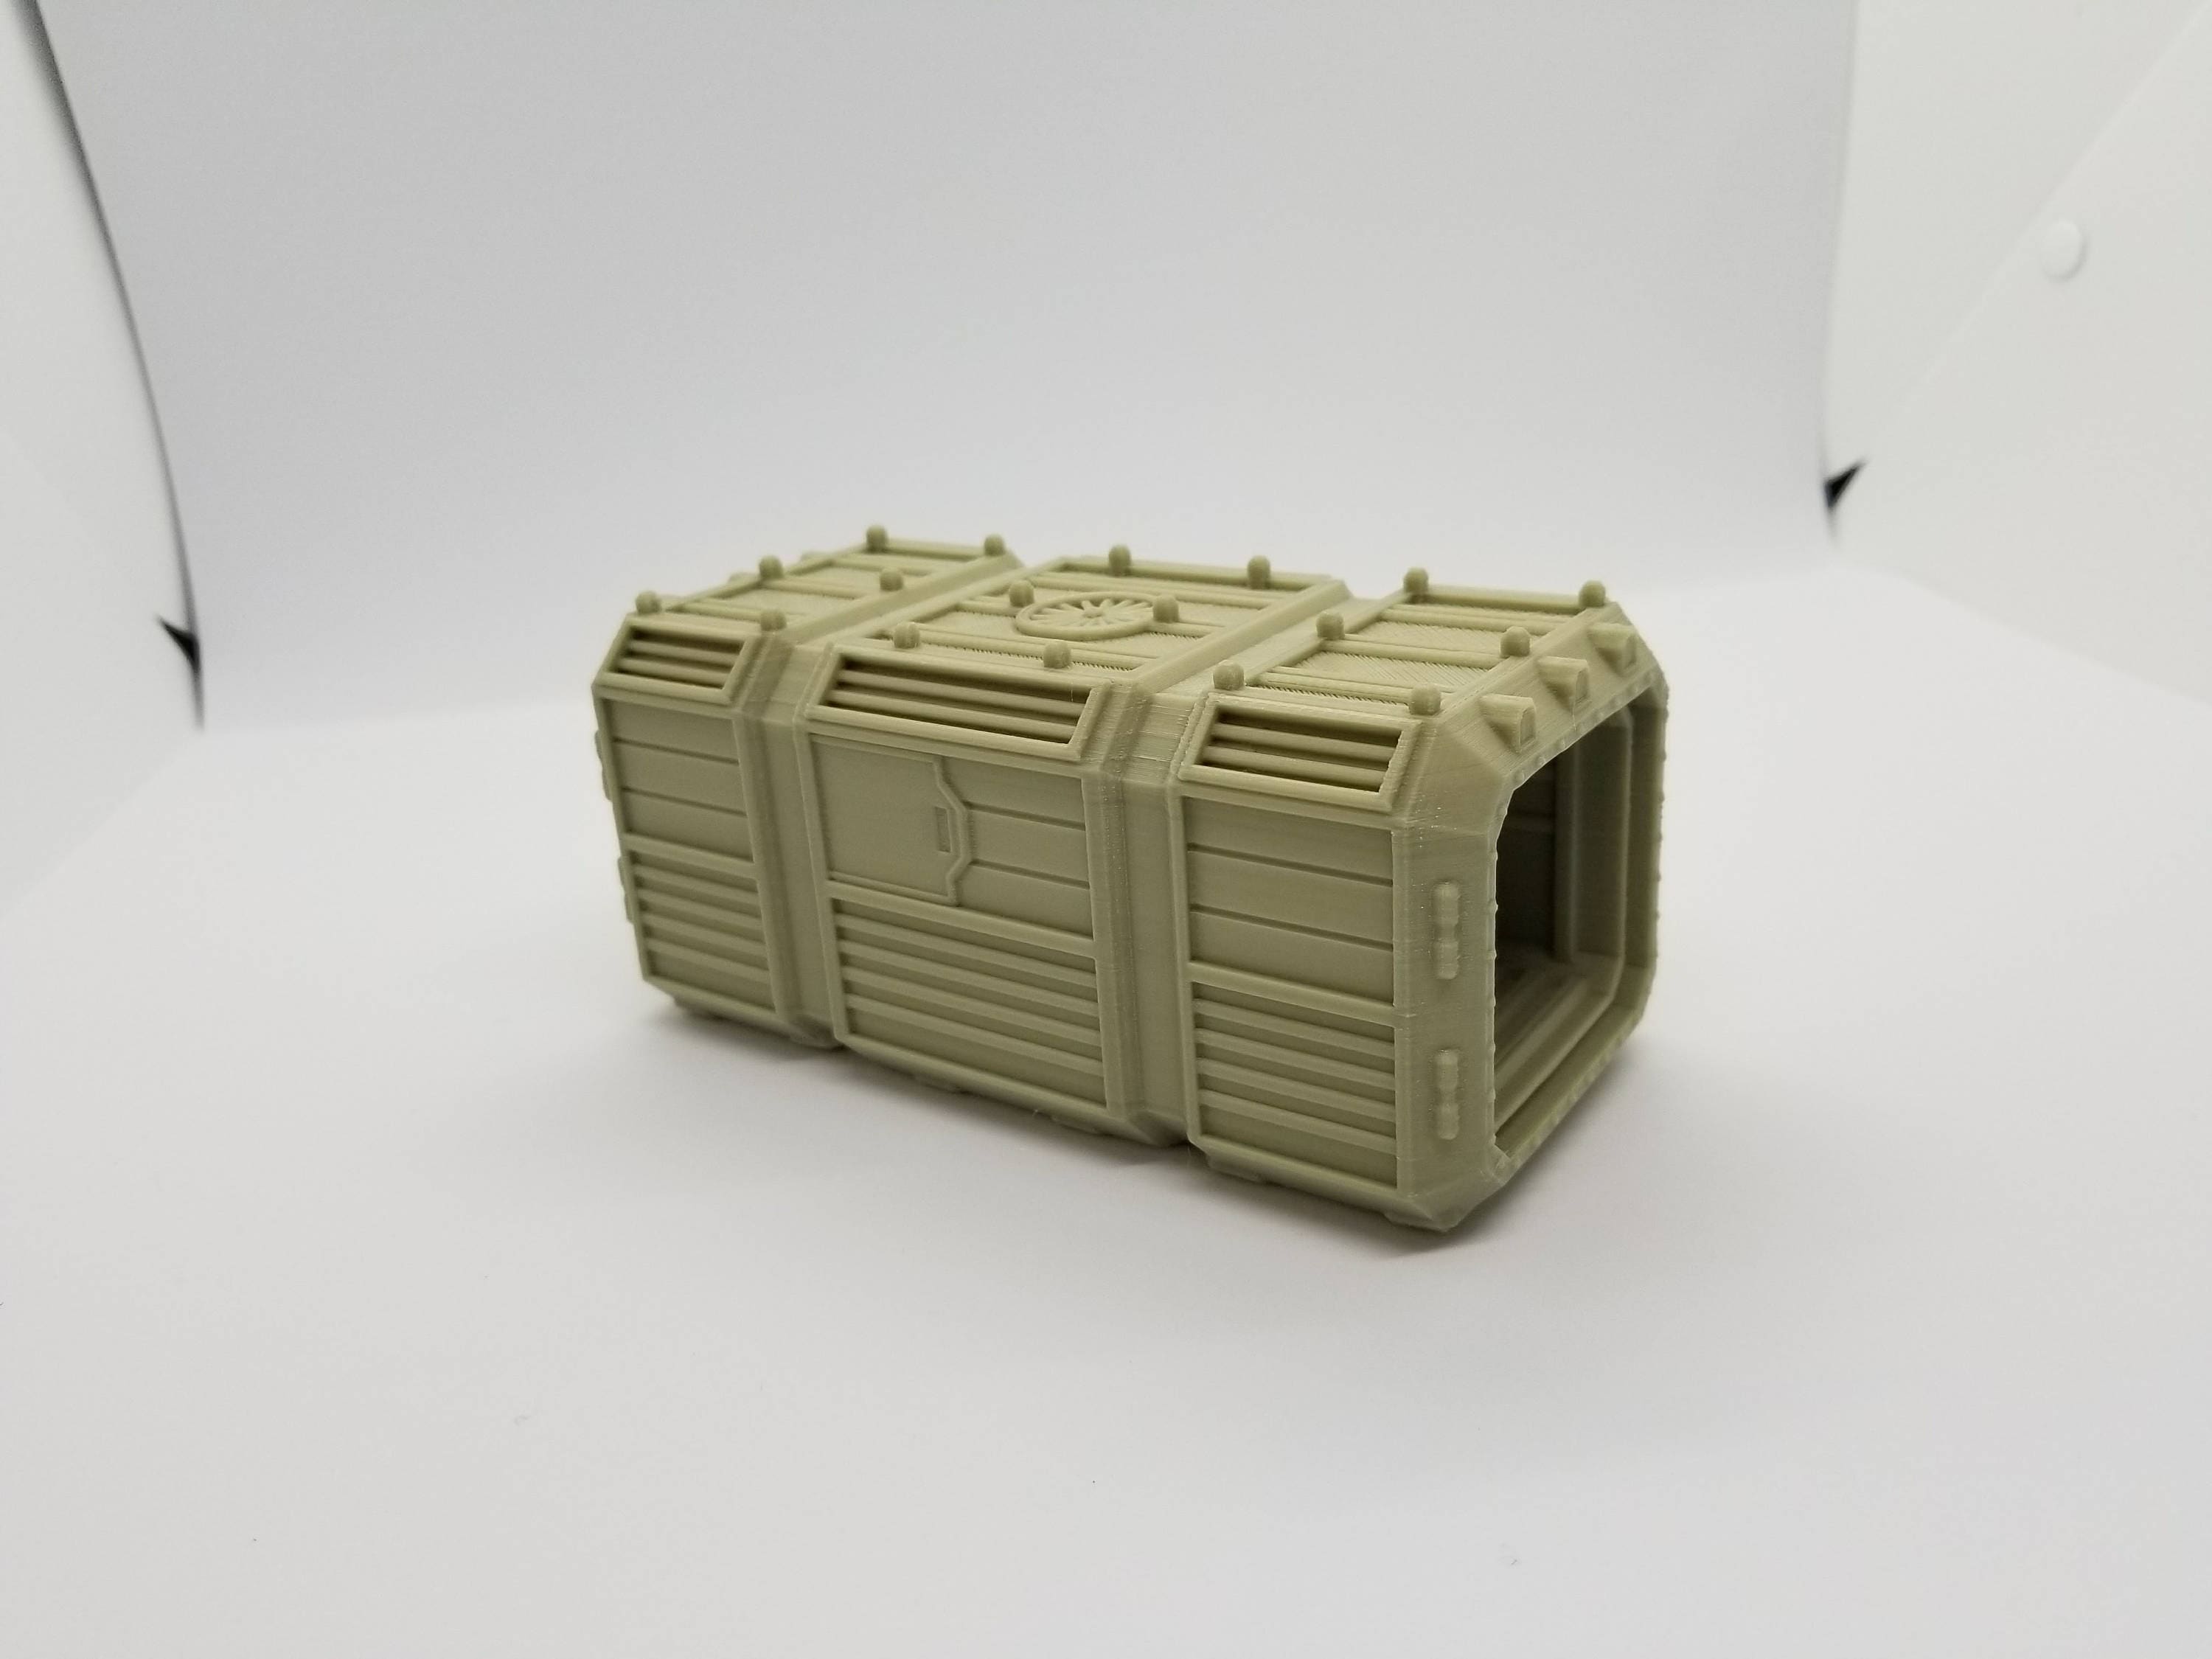 Warlayer / 3d Printed Sci-Fi Open Door Crate / 28mm Wargaming Terrain / Print to Order / Licensed Printer